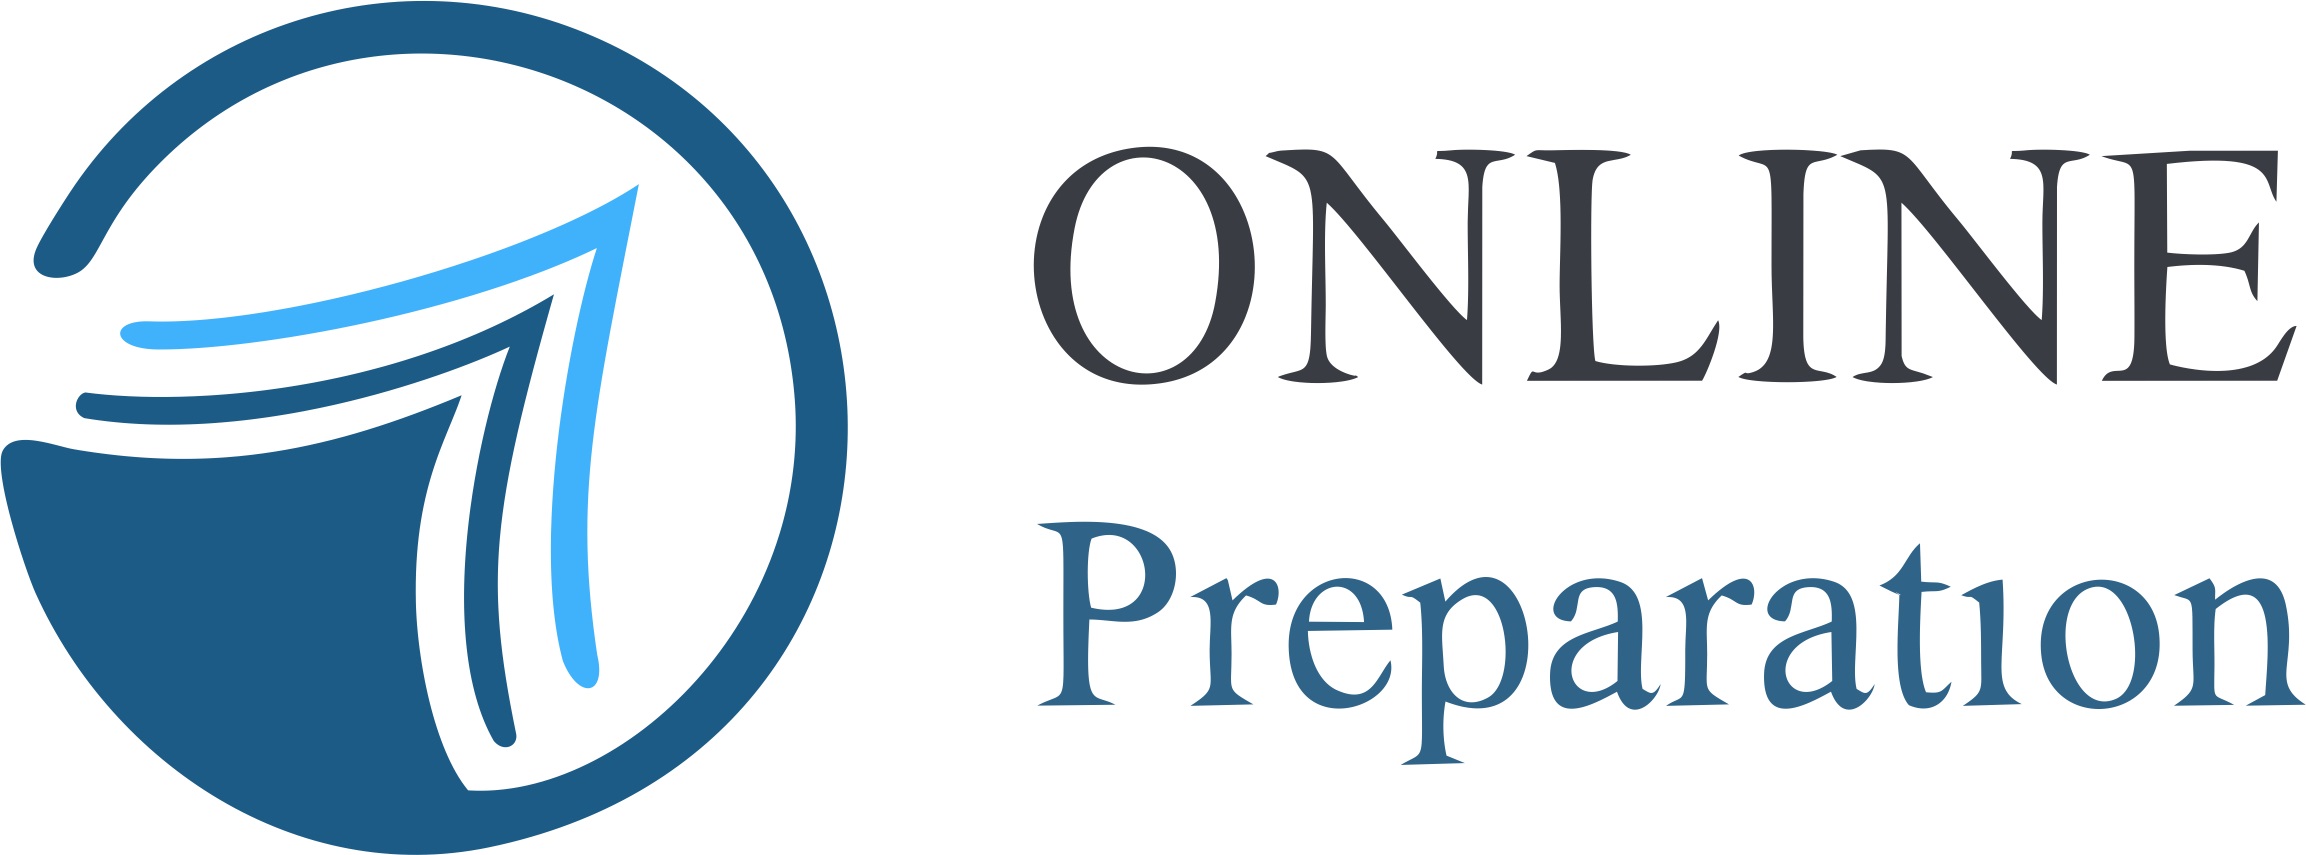 Online Preparation Professional Services | IT Services